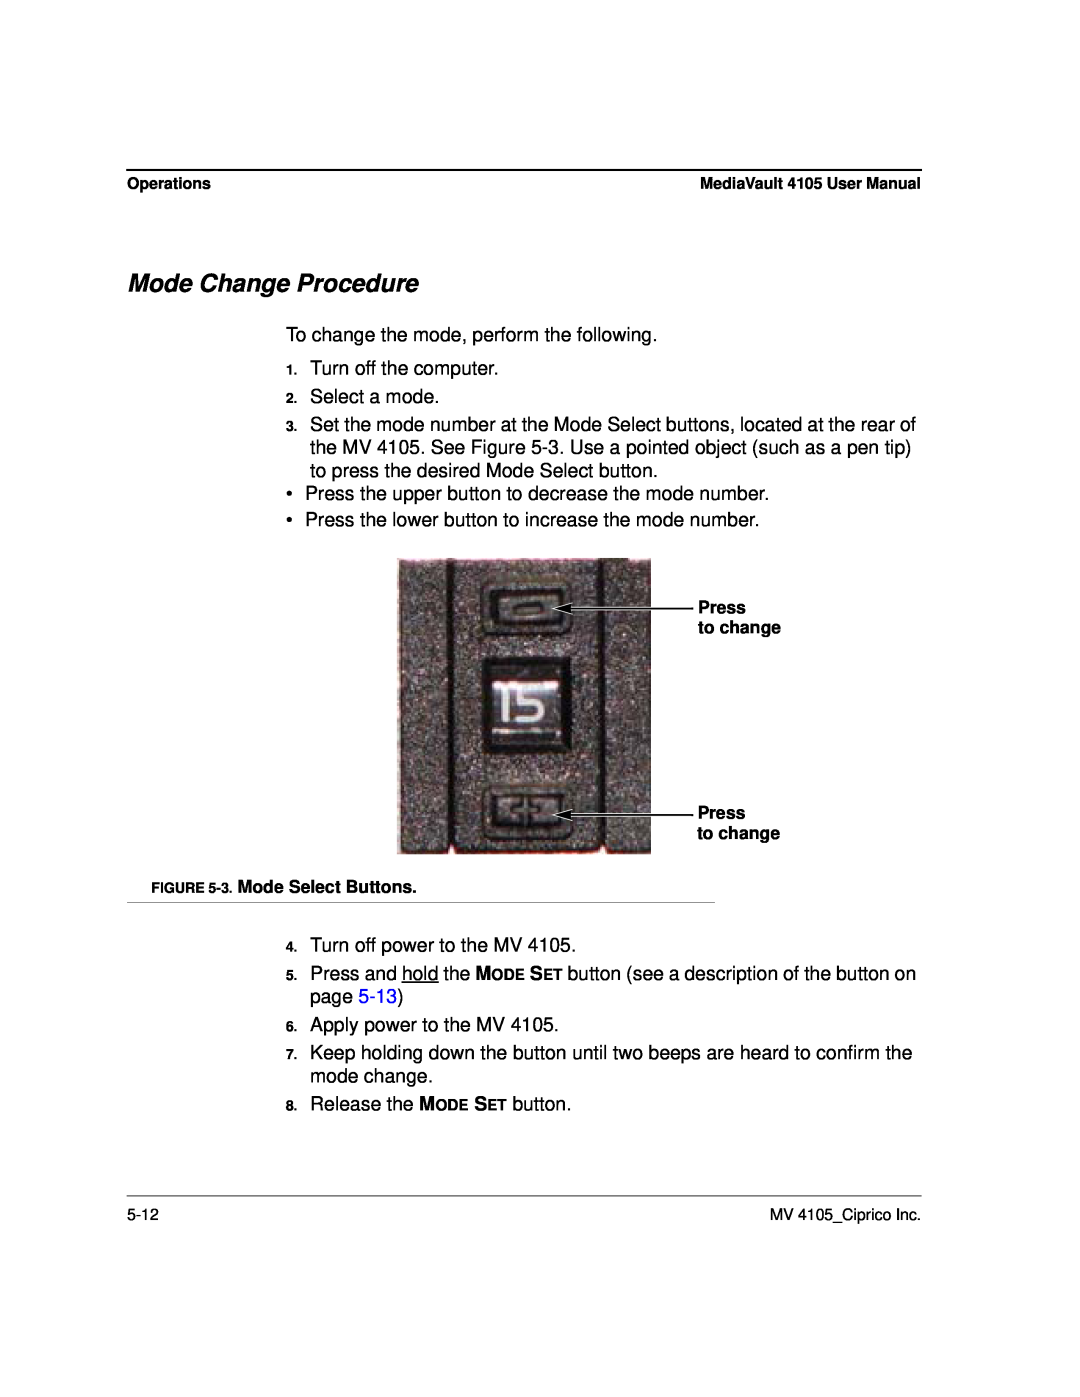 Ciprico 4105 Series user manual Mode Change Procedure 